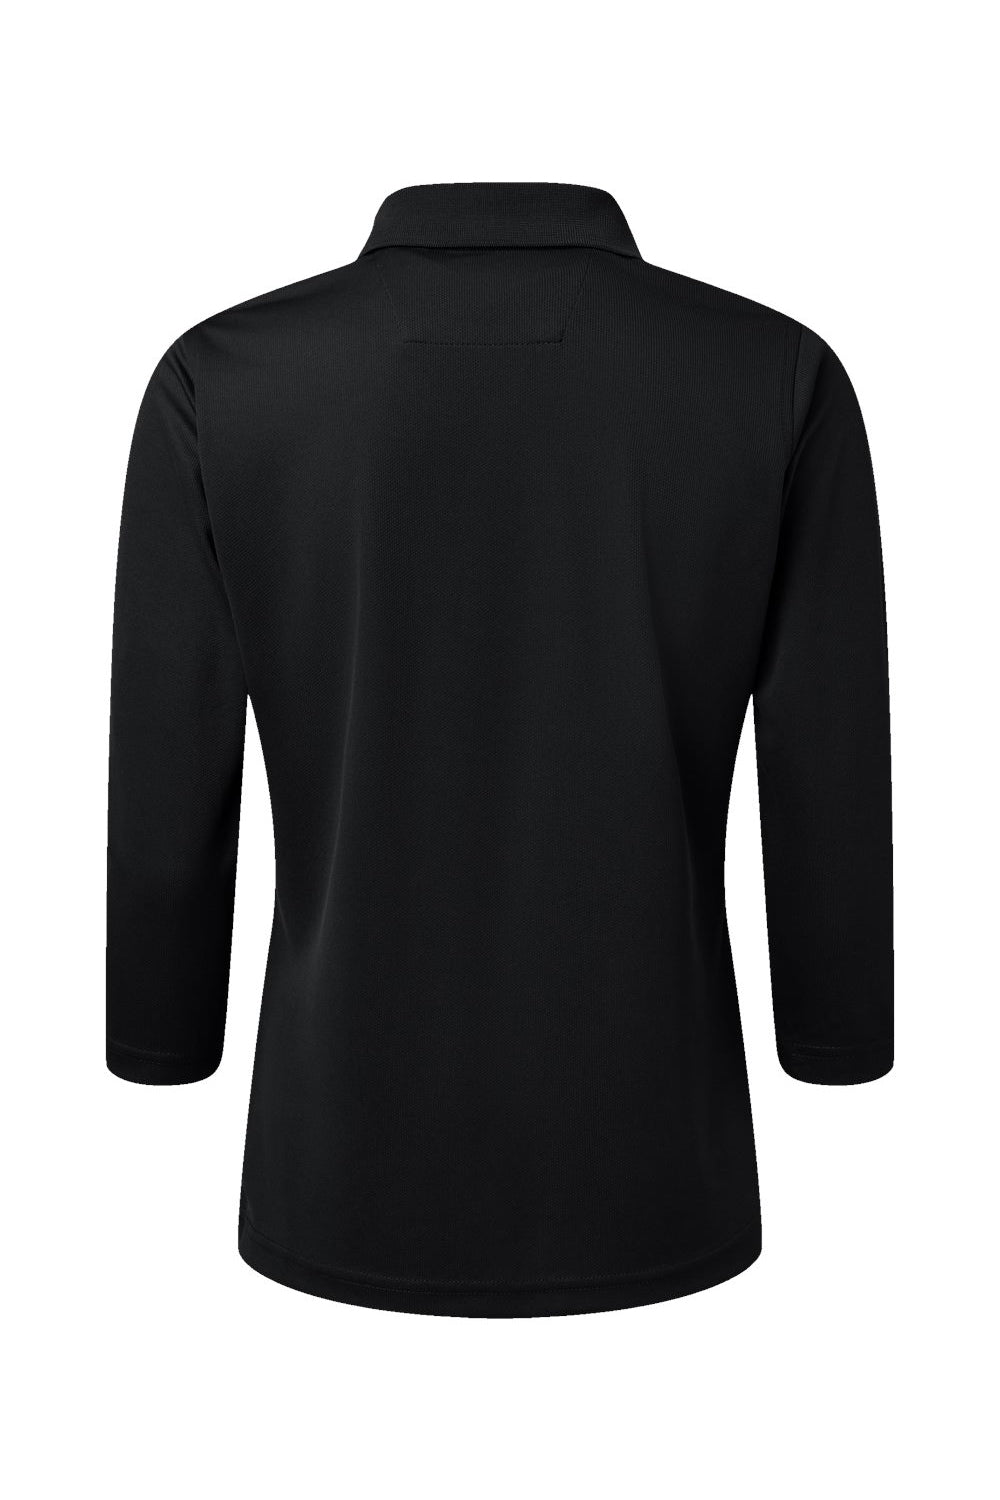 Paragon 120 Womens Lady Palm 3/4 Sleeve Polo Shirt Black Flat Back